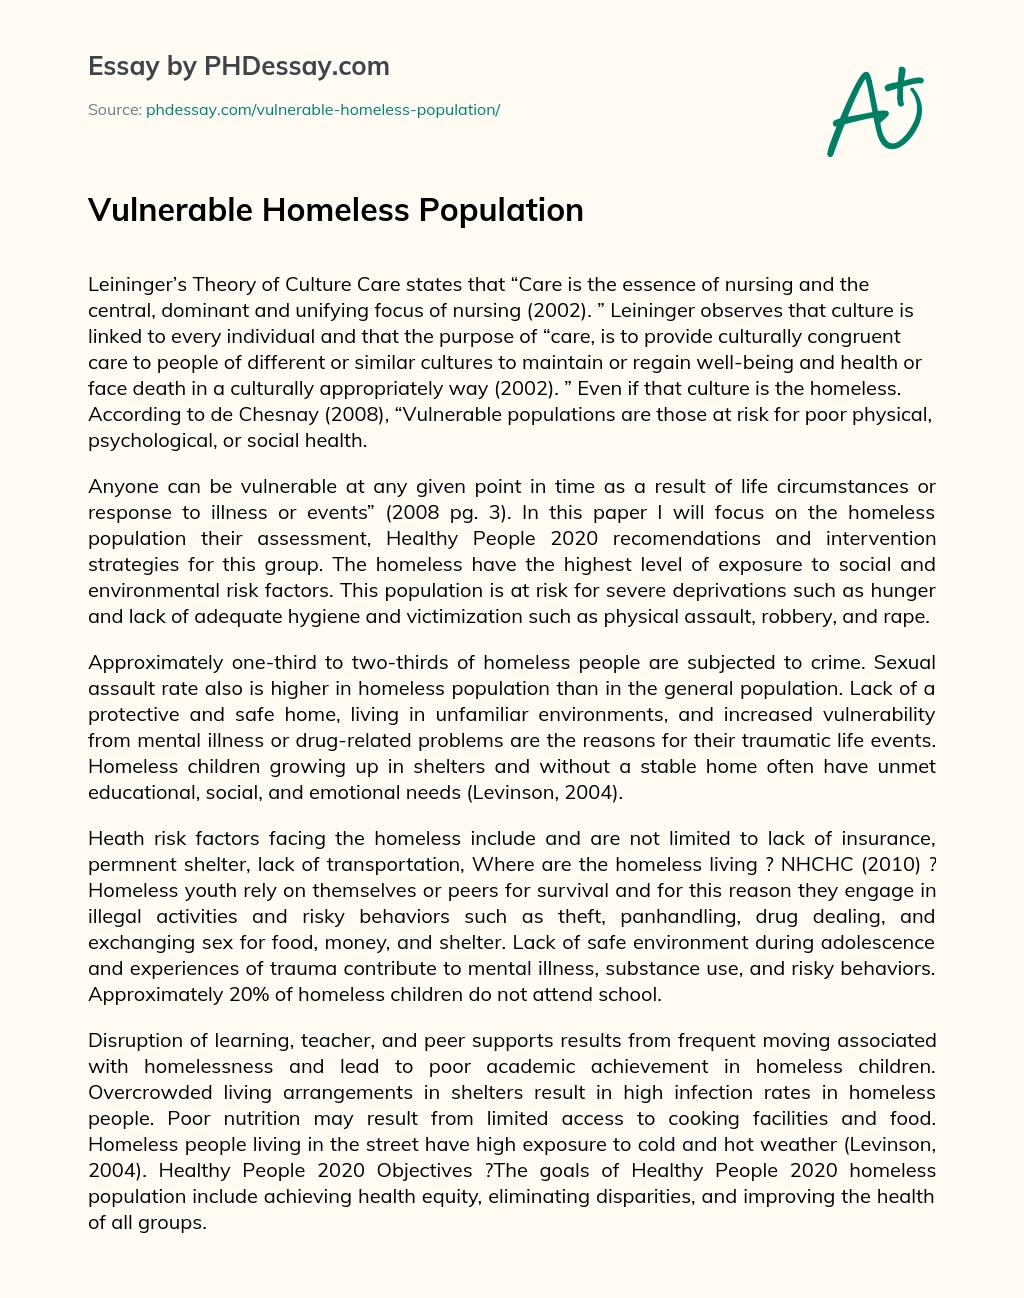 Vulnerable Homeless Population essay